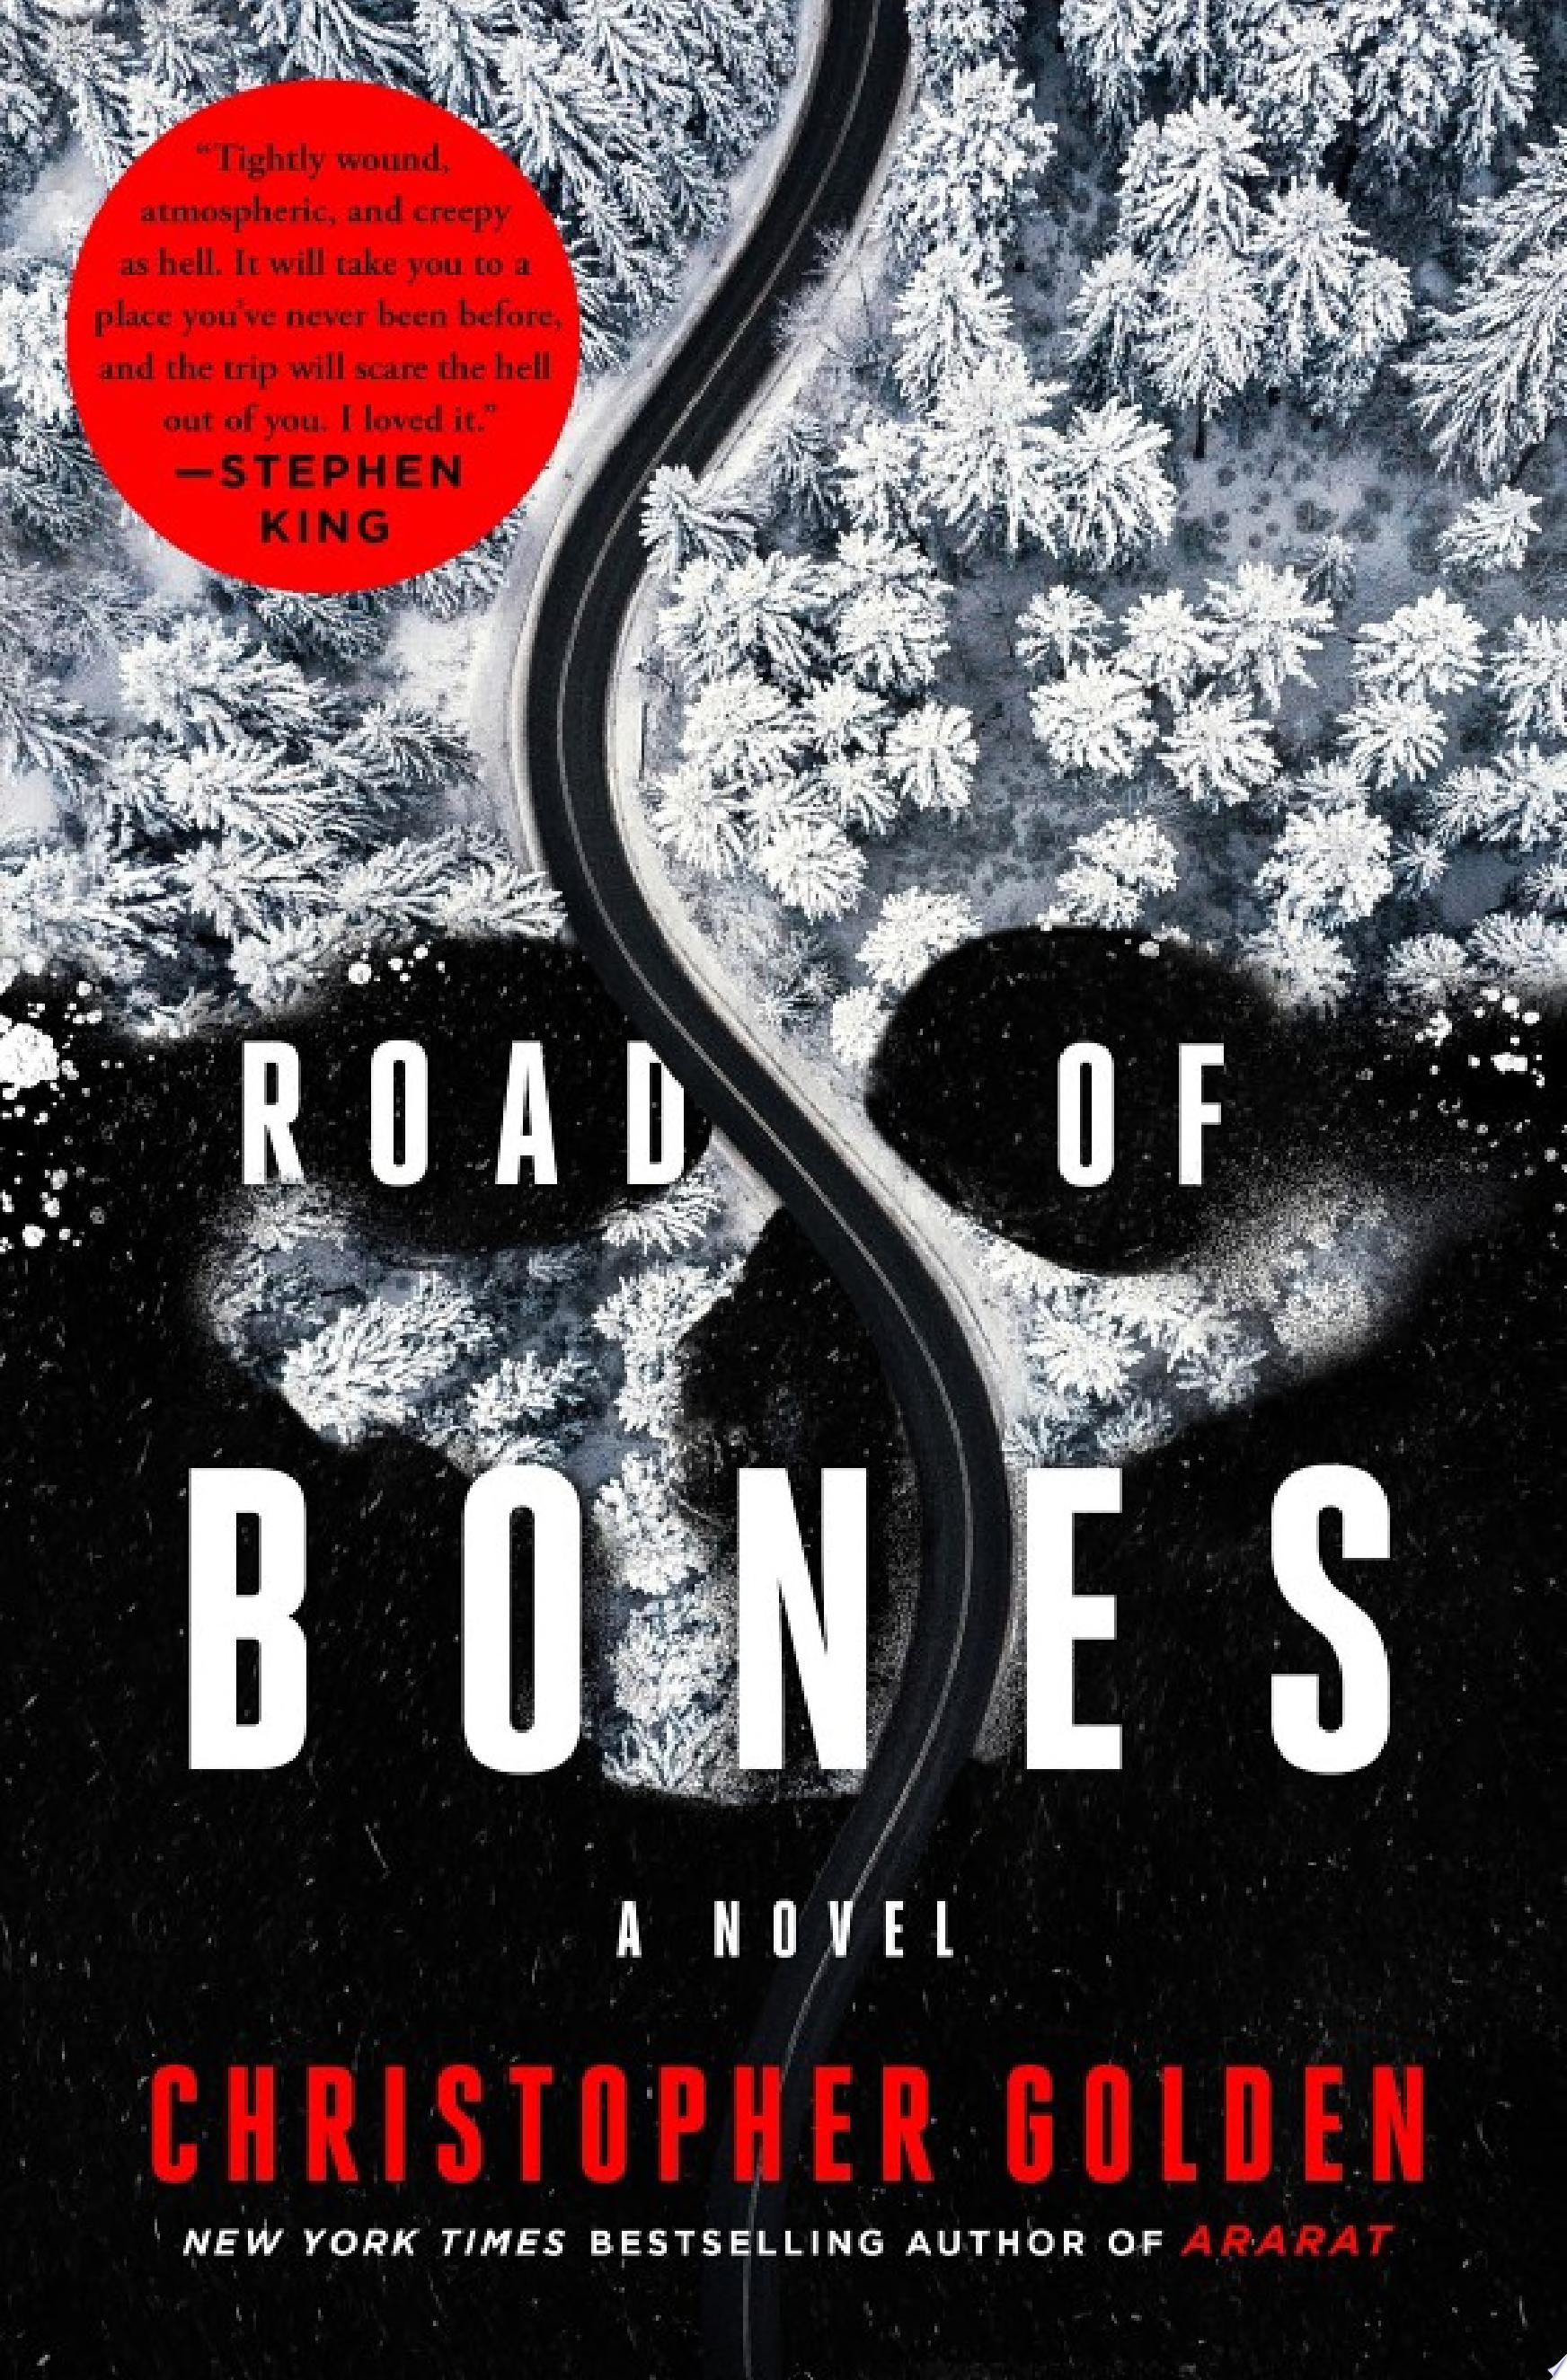 Image for "Road of Bones"